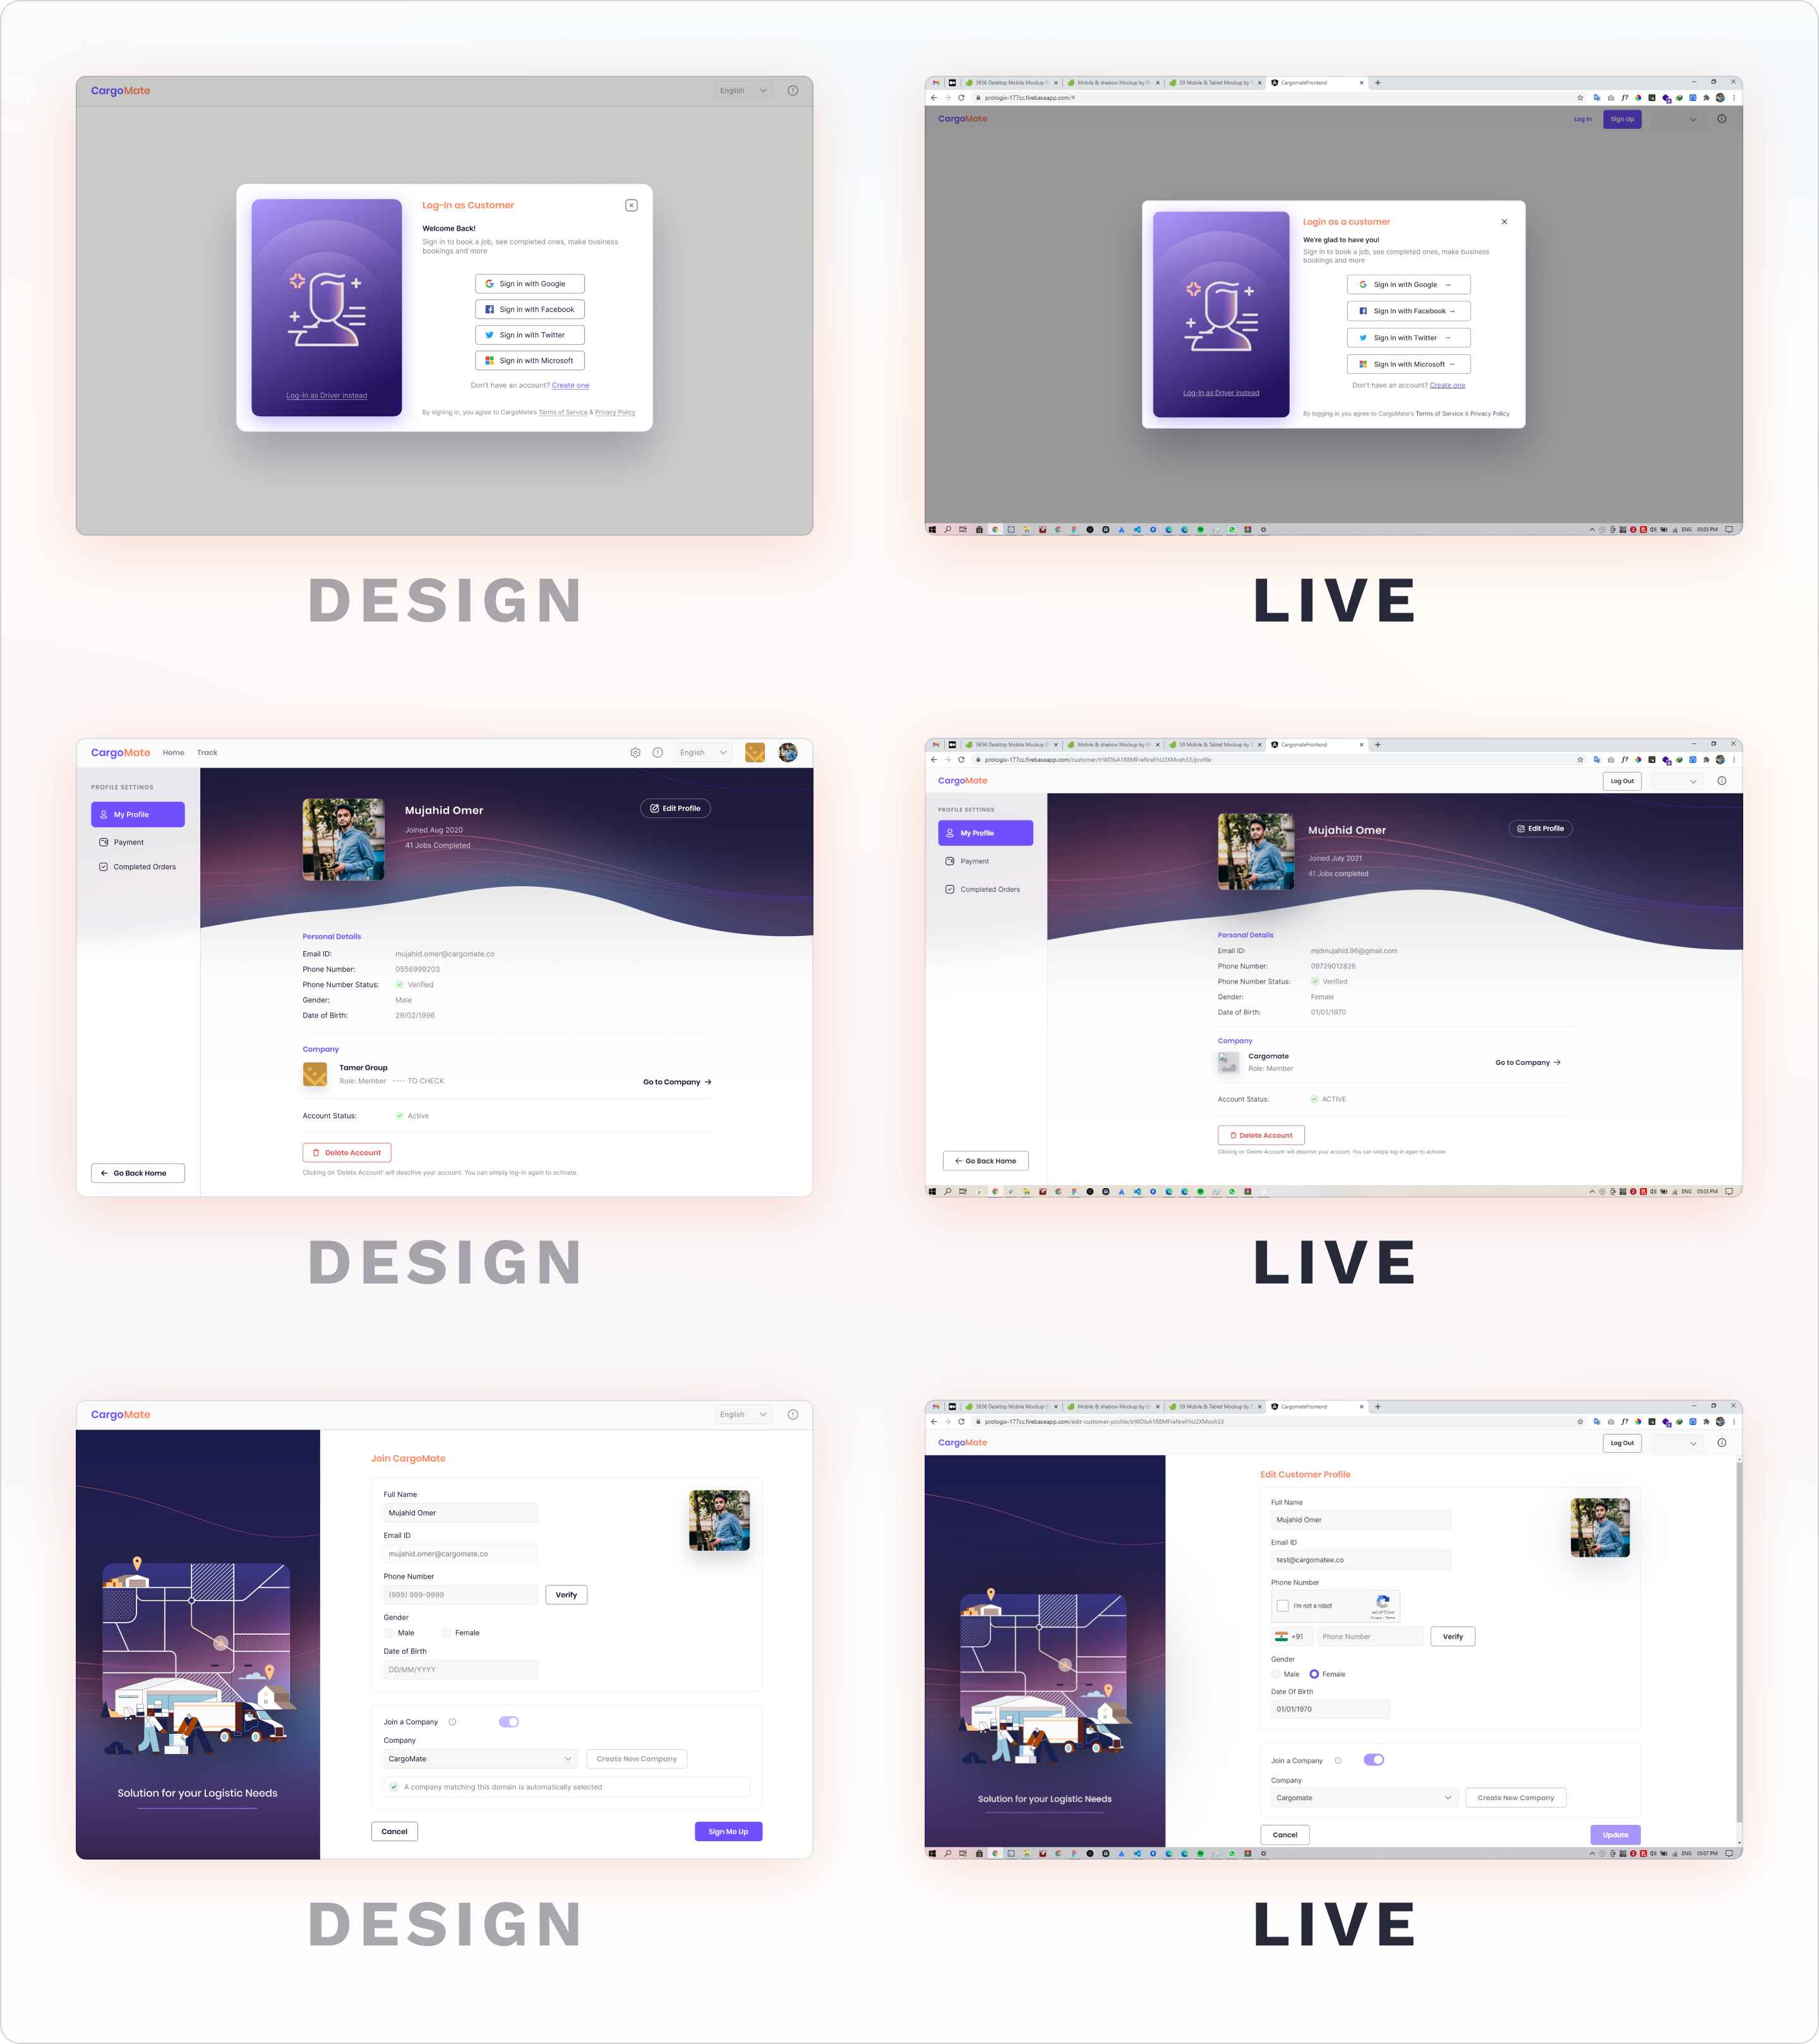 Design vs Live